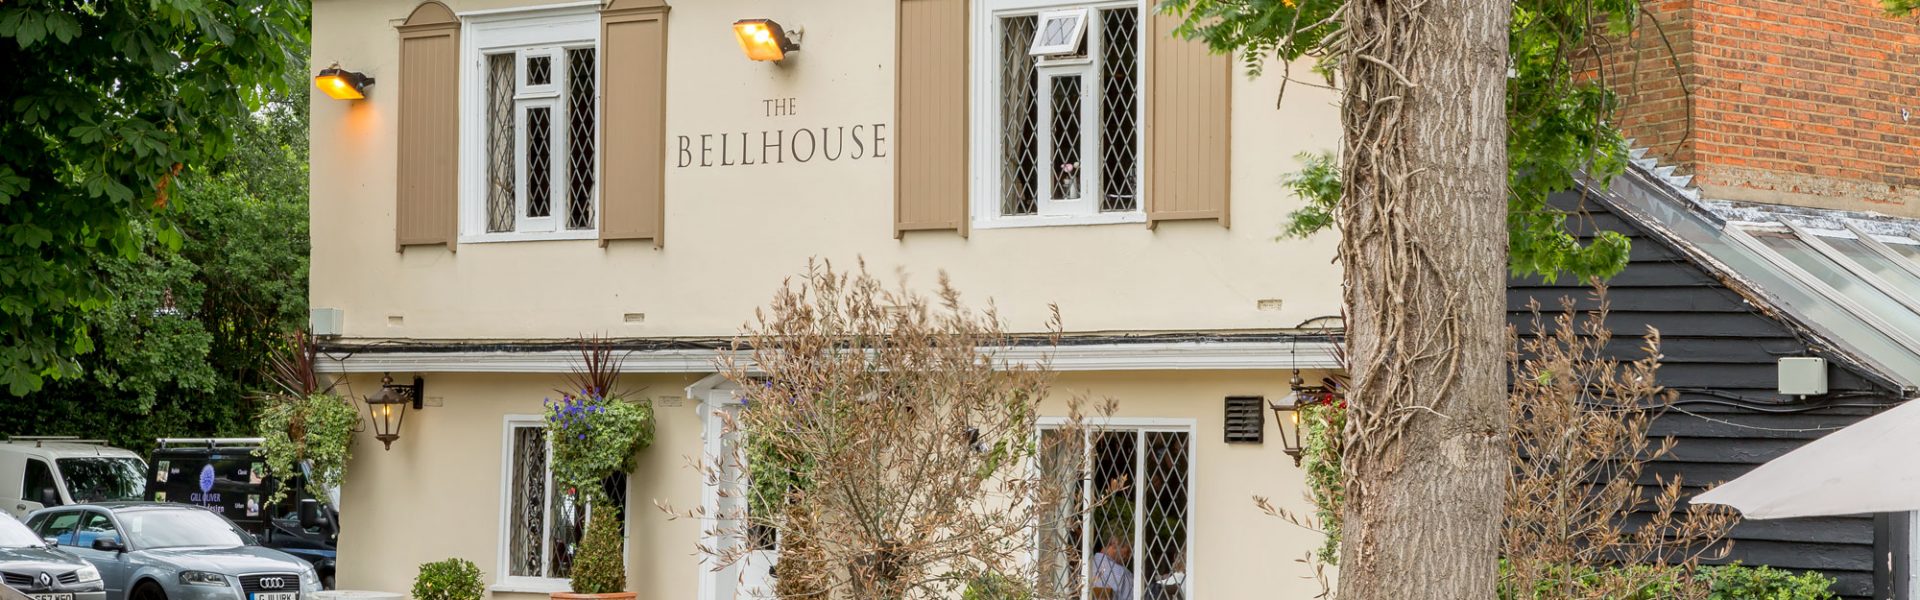 The Bellhouse Pub